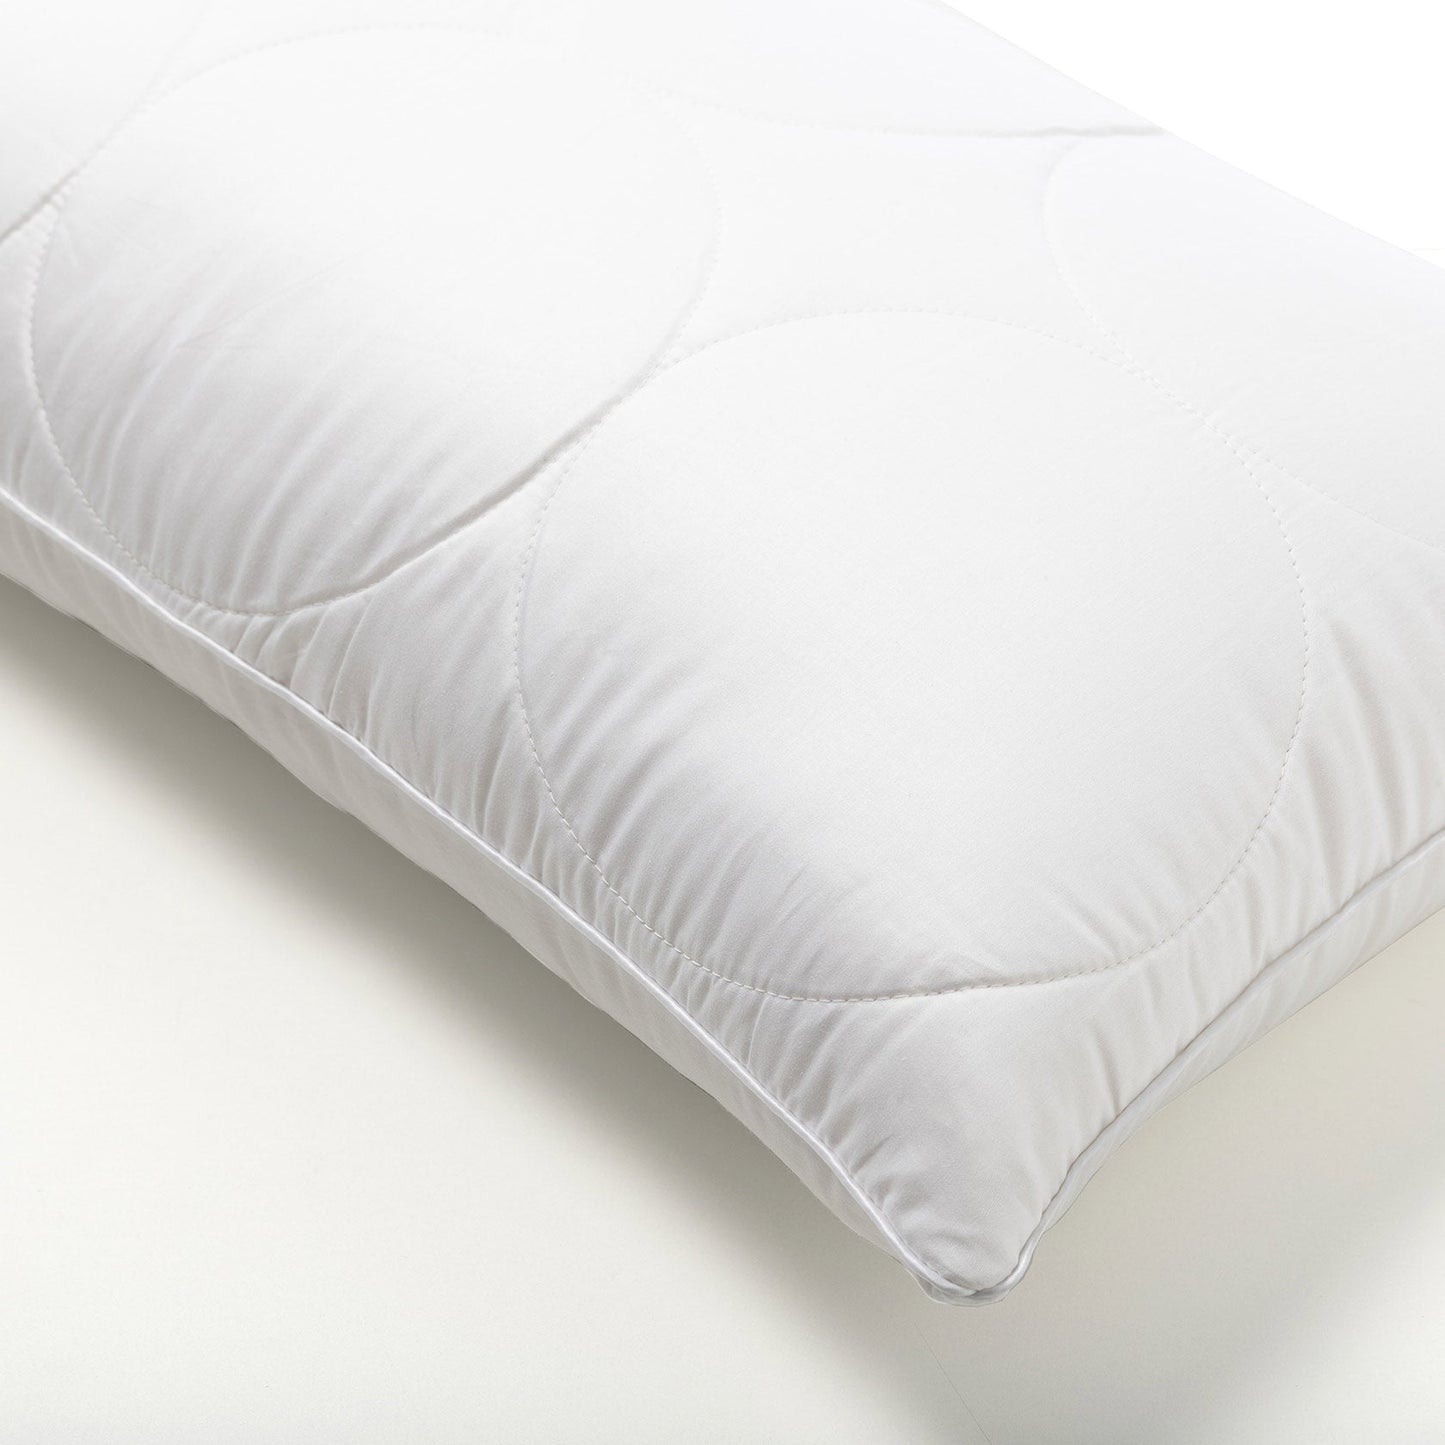 MiniJumbuk Kids Sleep Calm Wool Cotton Quilted Pillow (7+ years)